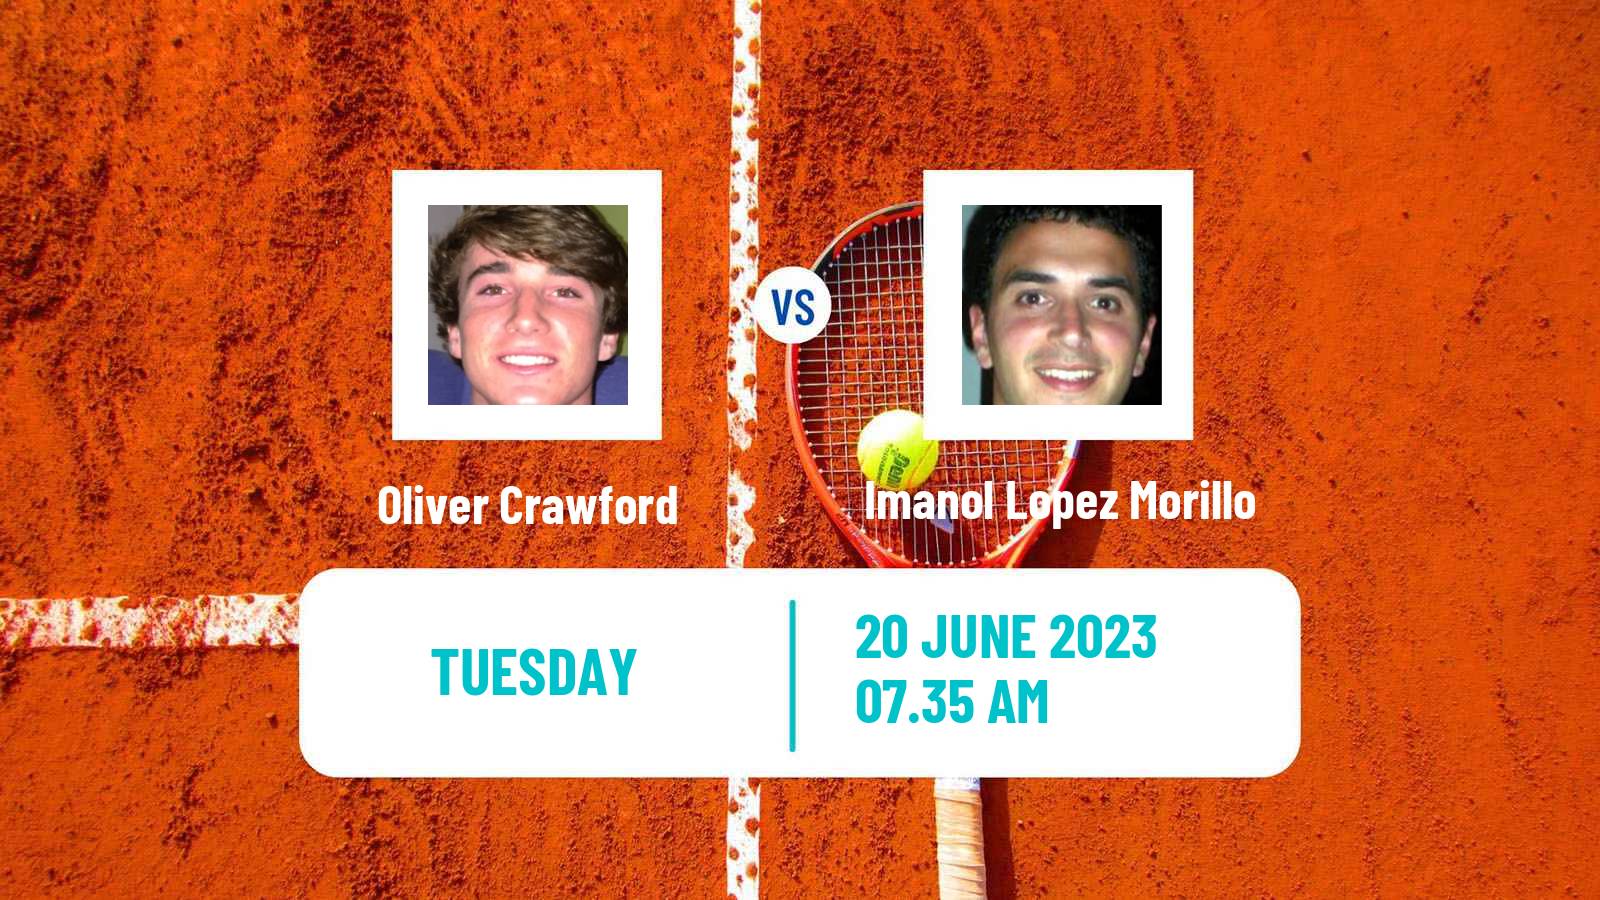 Tennis ITF M25 Mungia Men Oliver Crawford - Imanol Lopez Morillo